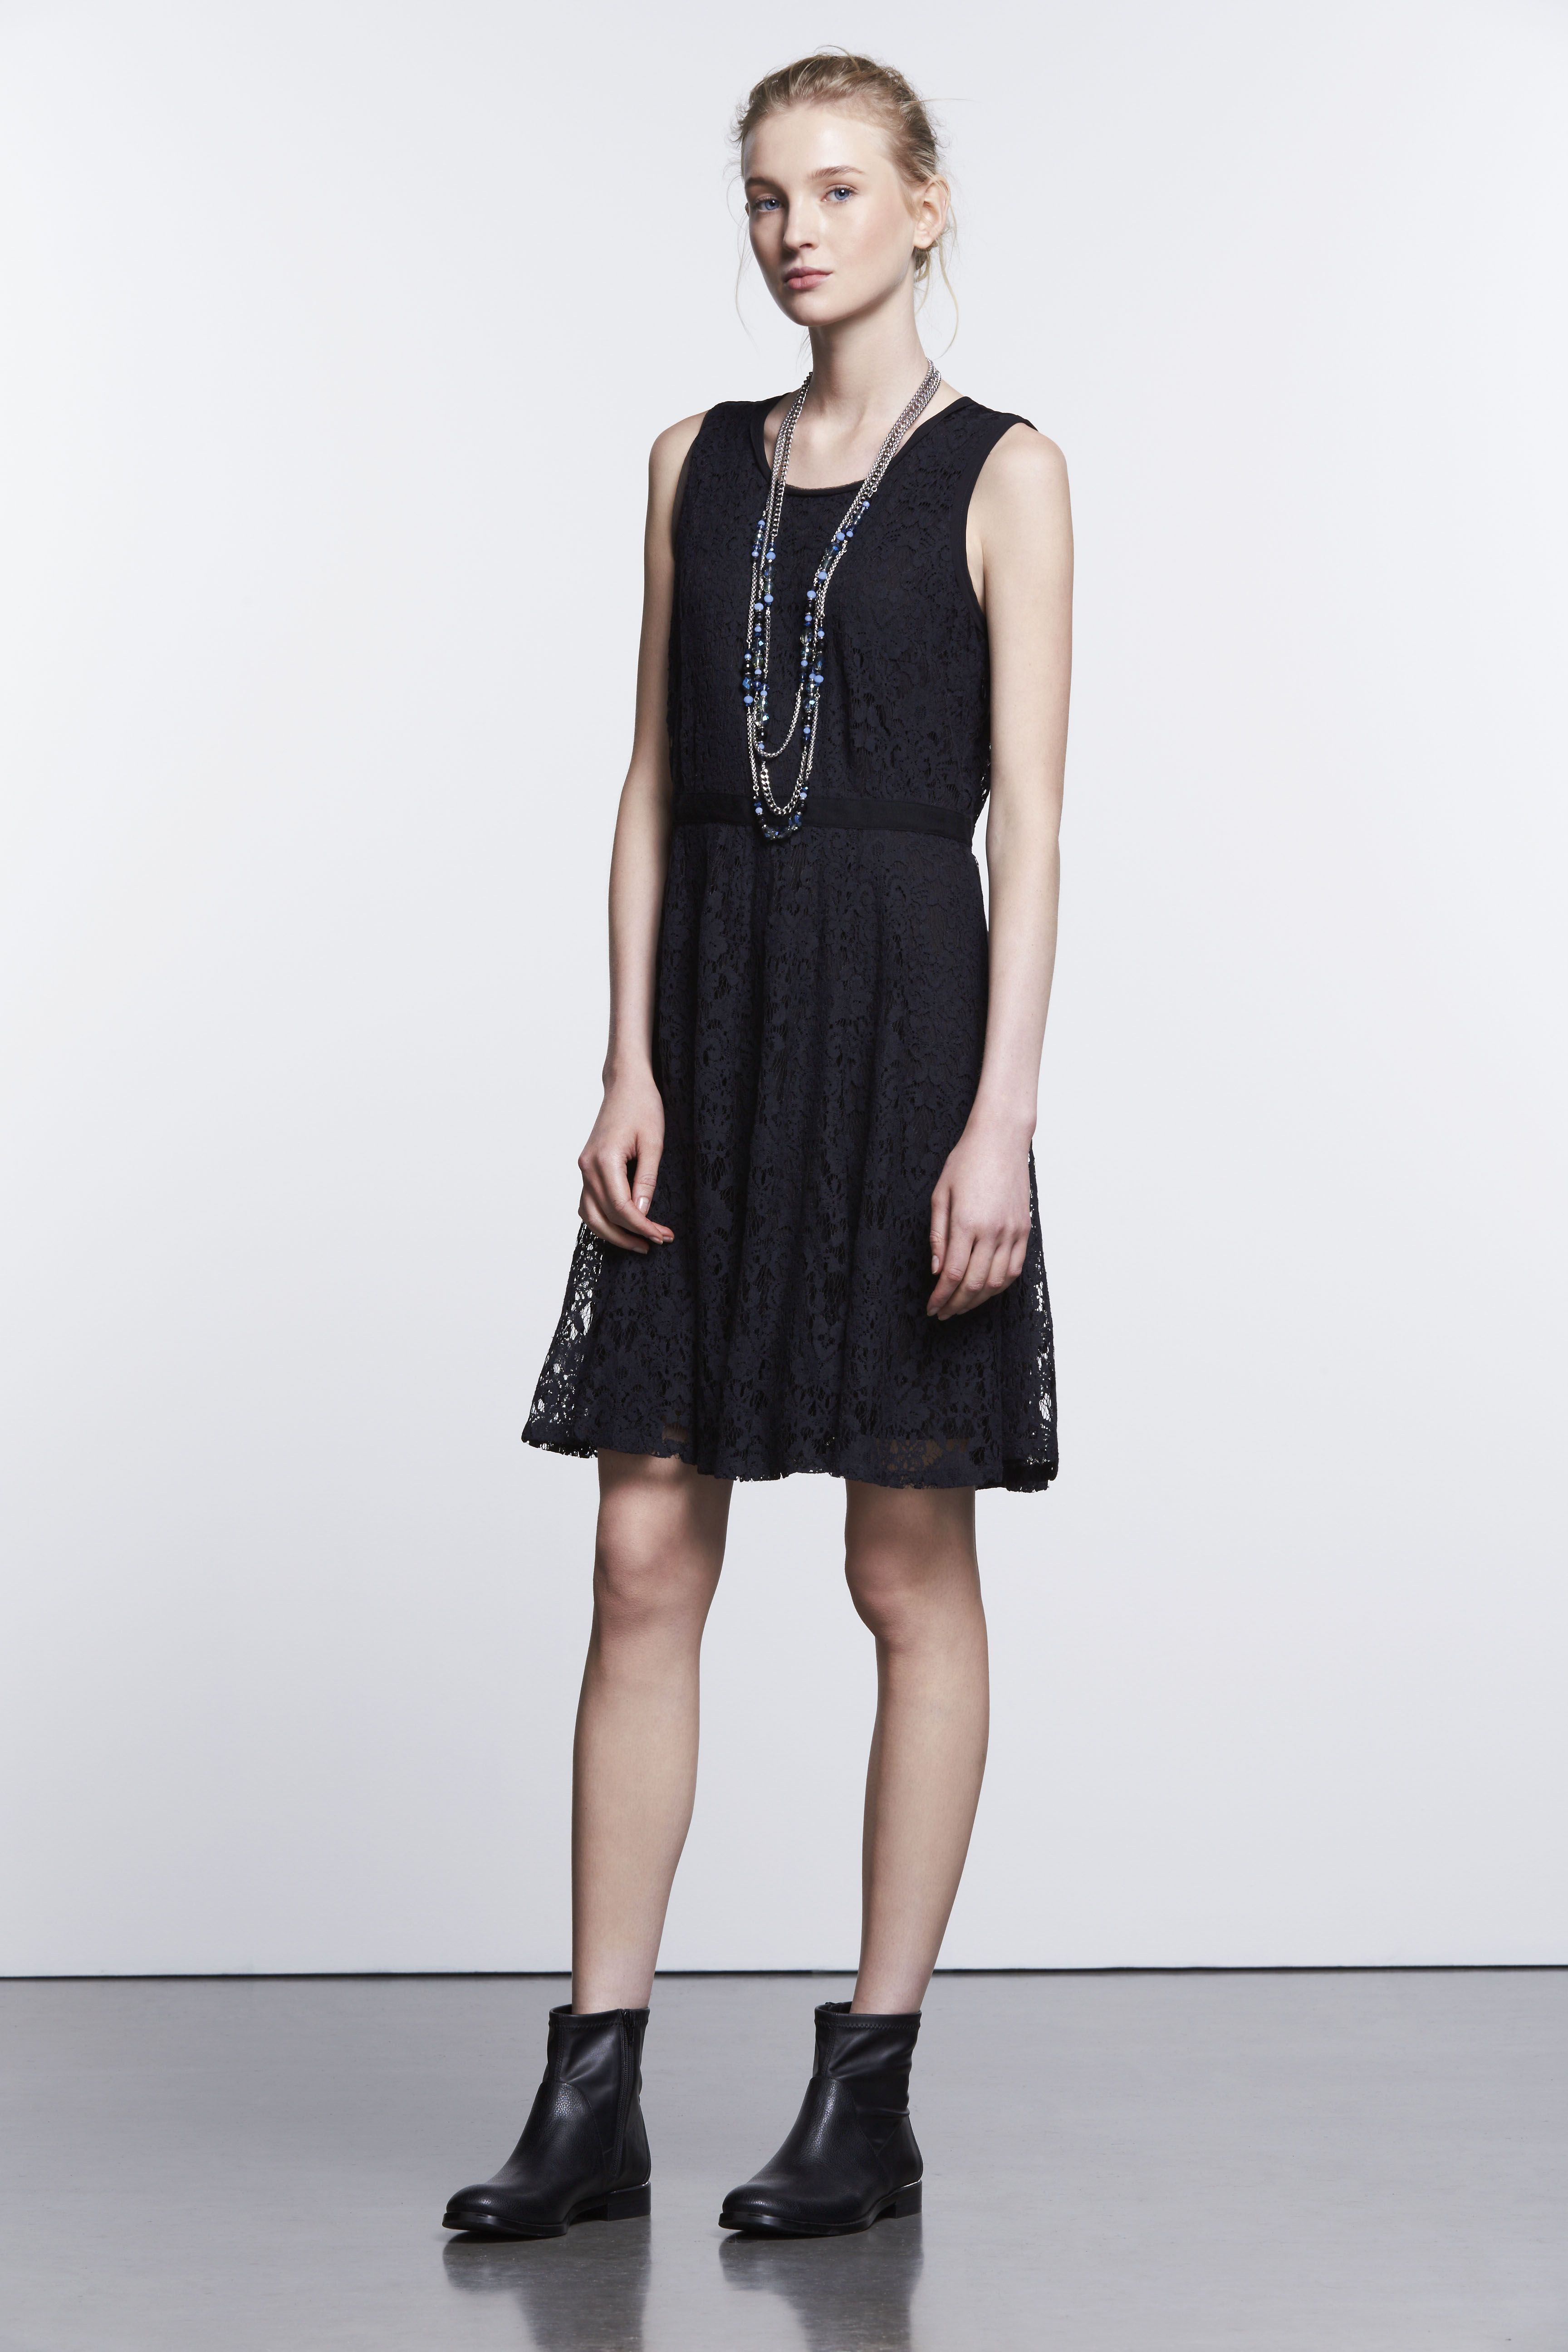 Vera Wang Launches Simply Noir Under-$100 Black Dresses - Simply Vera Vera  Wang Black Dresses